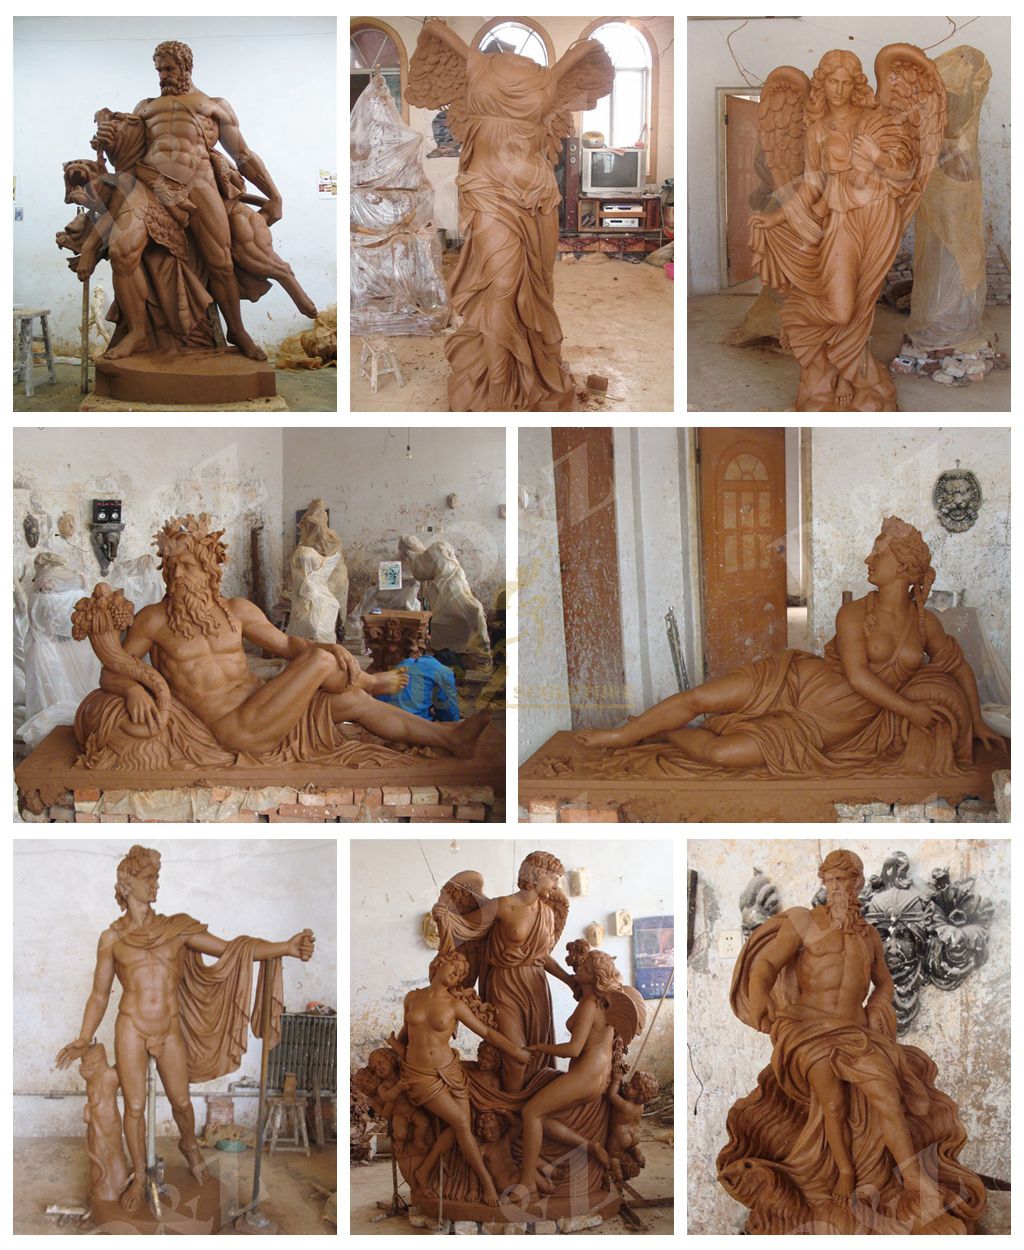 Exquisite Life-Size Nude Art Sculptures Of Women On Sale